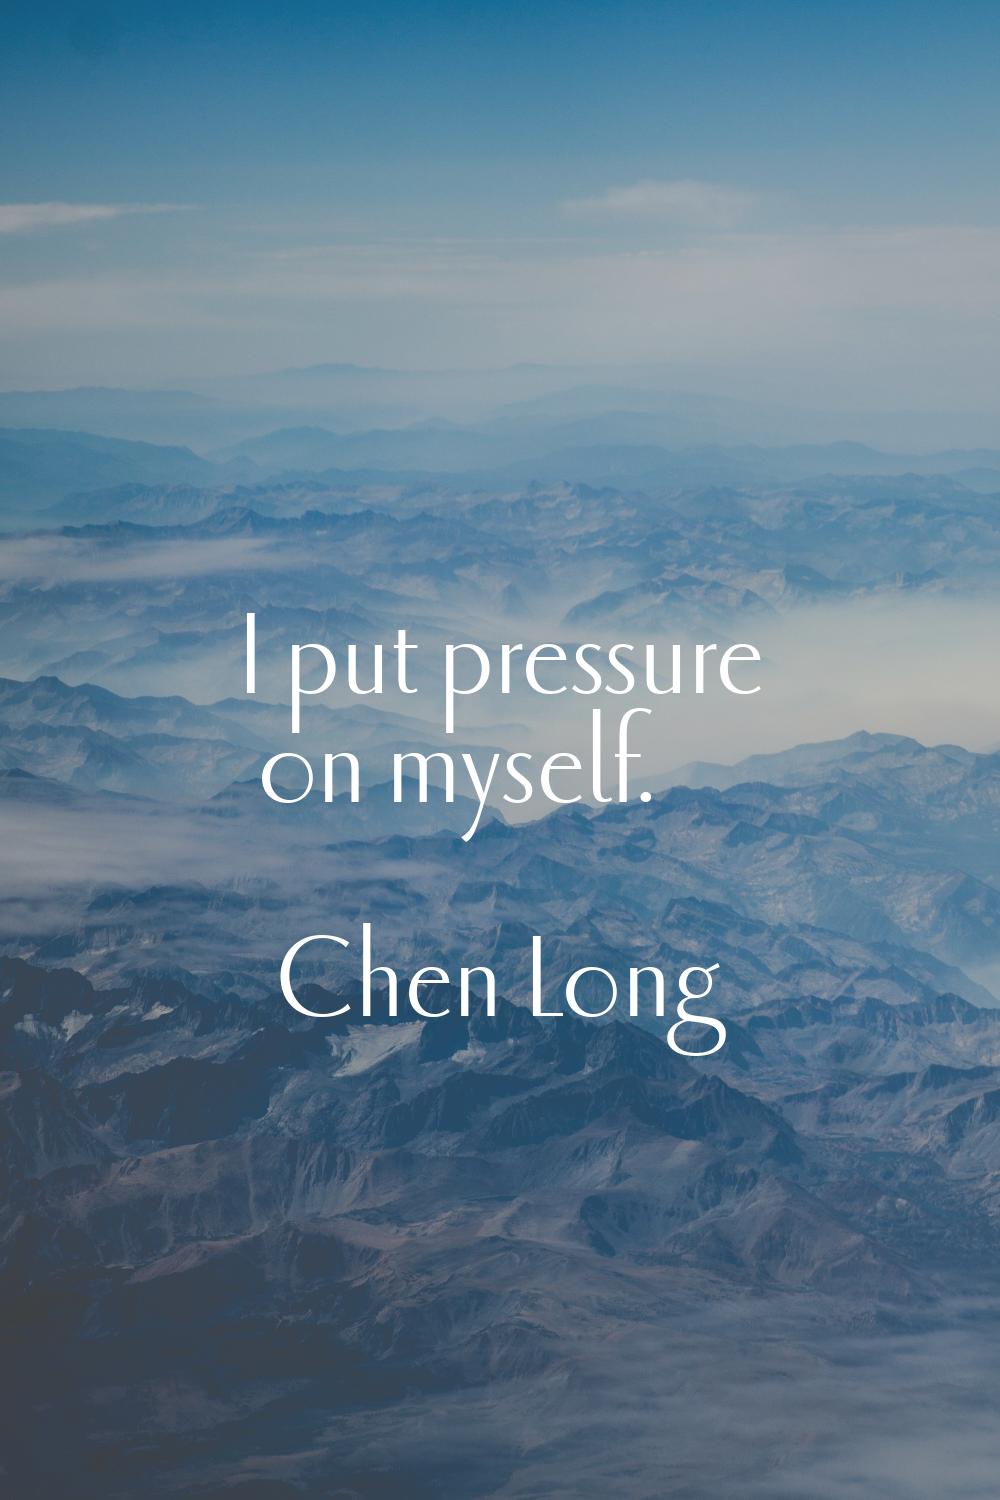 I put pressure on myself.